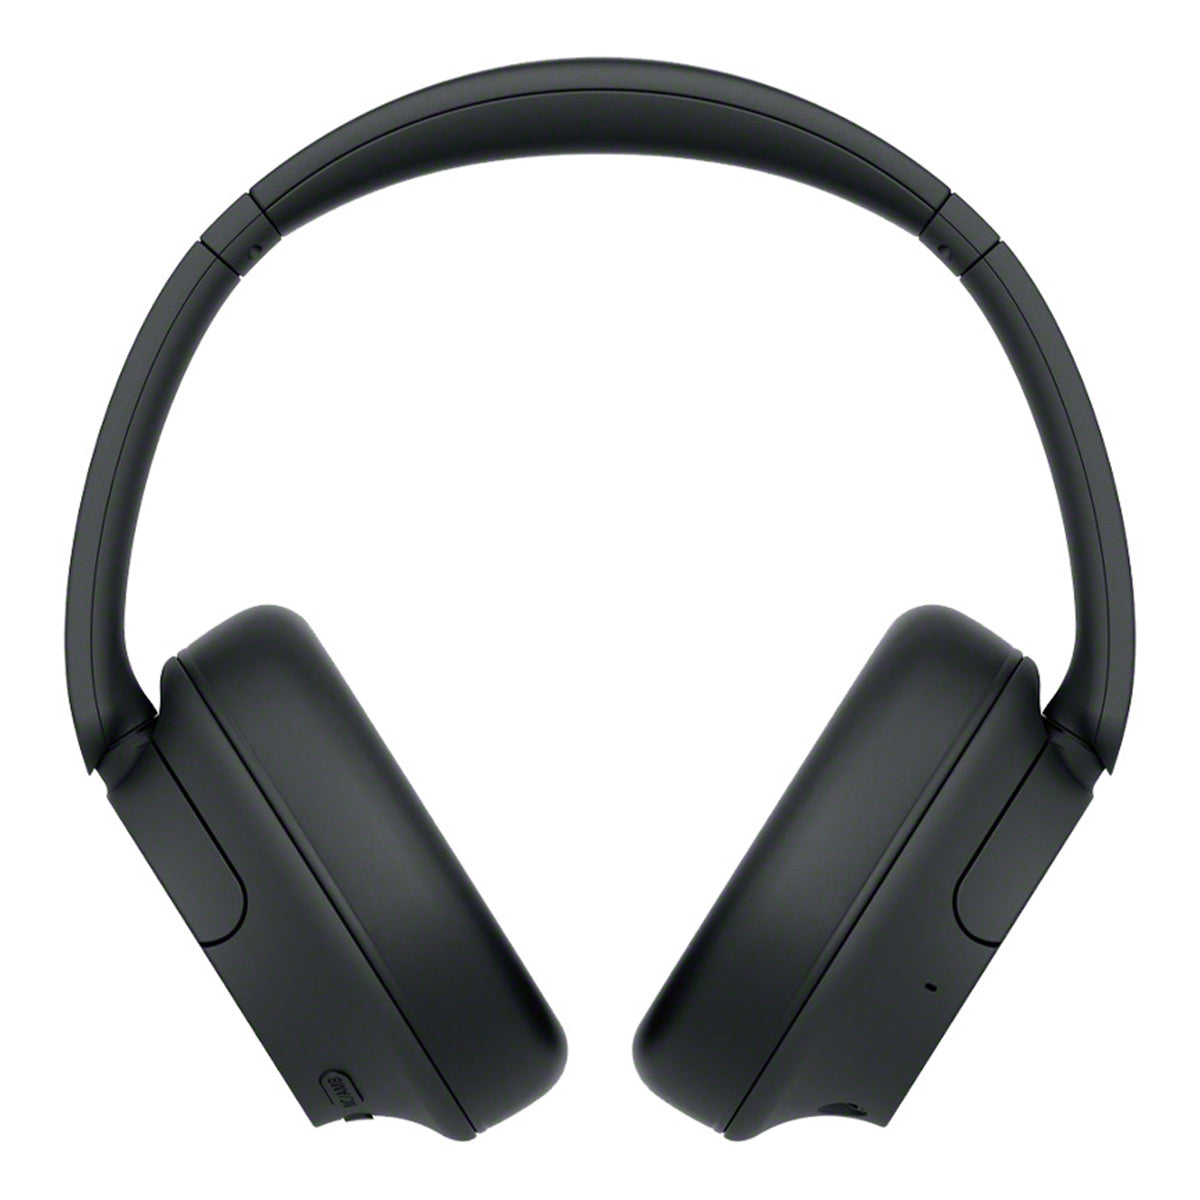 Sony Headphones, In-Ear & Over-Ear Headphones